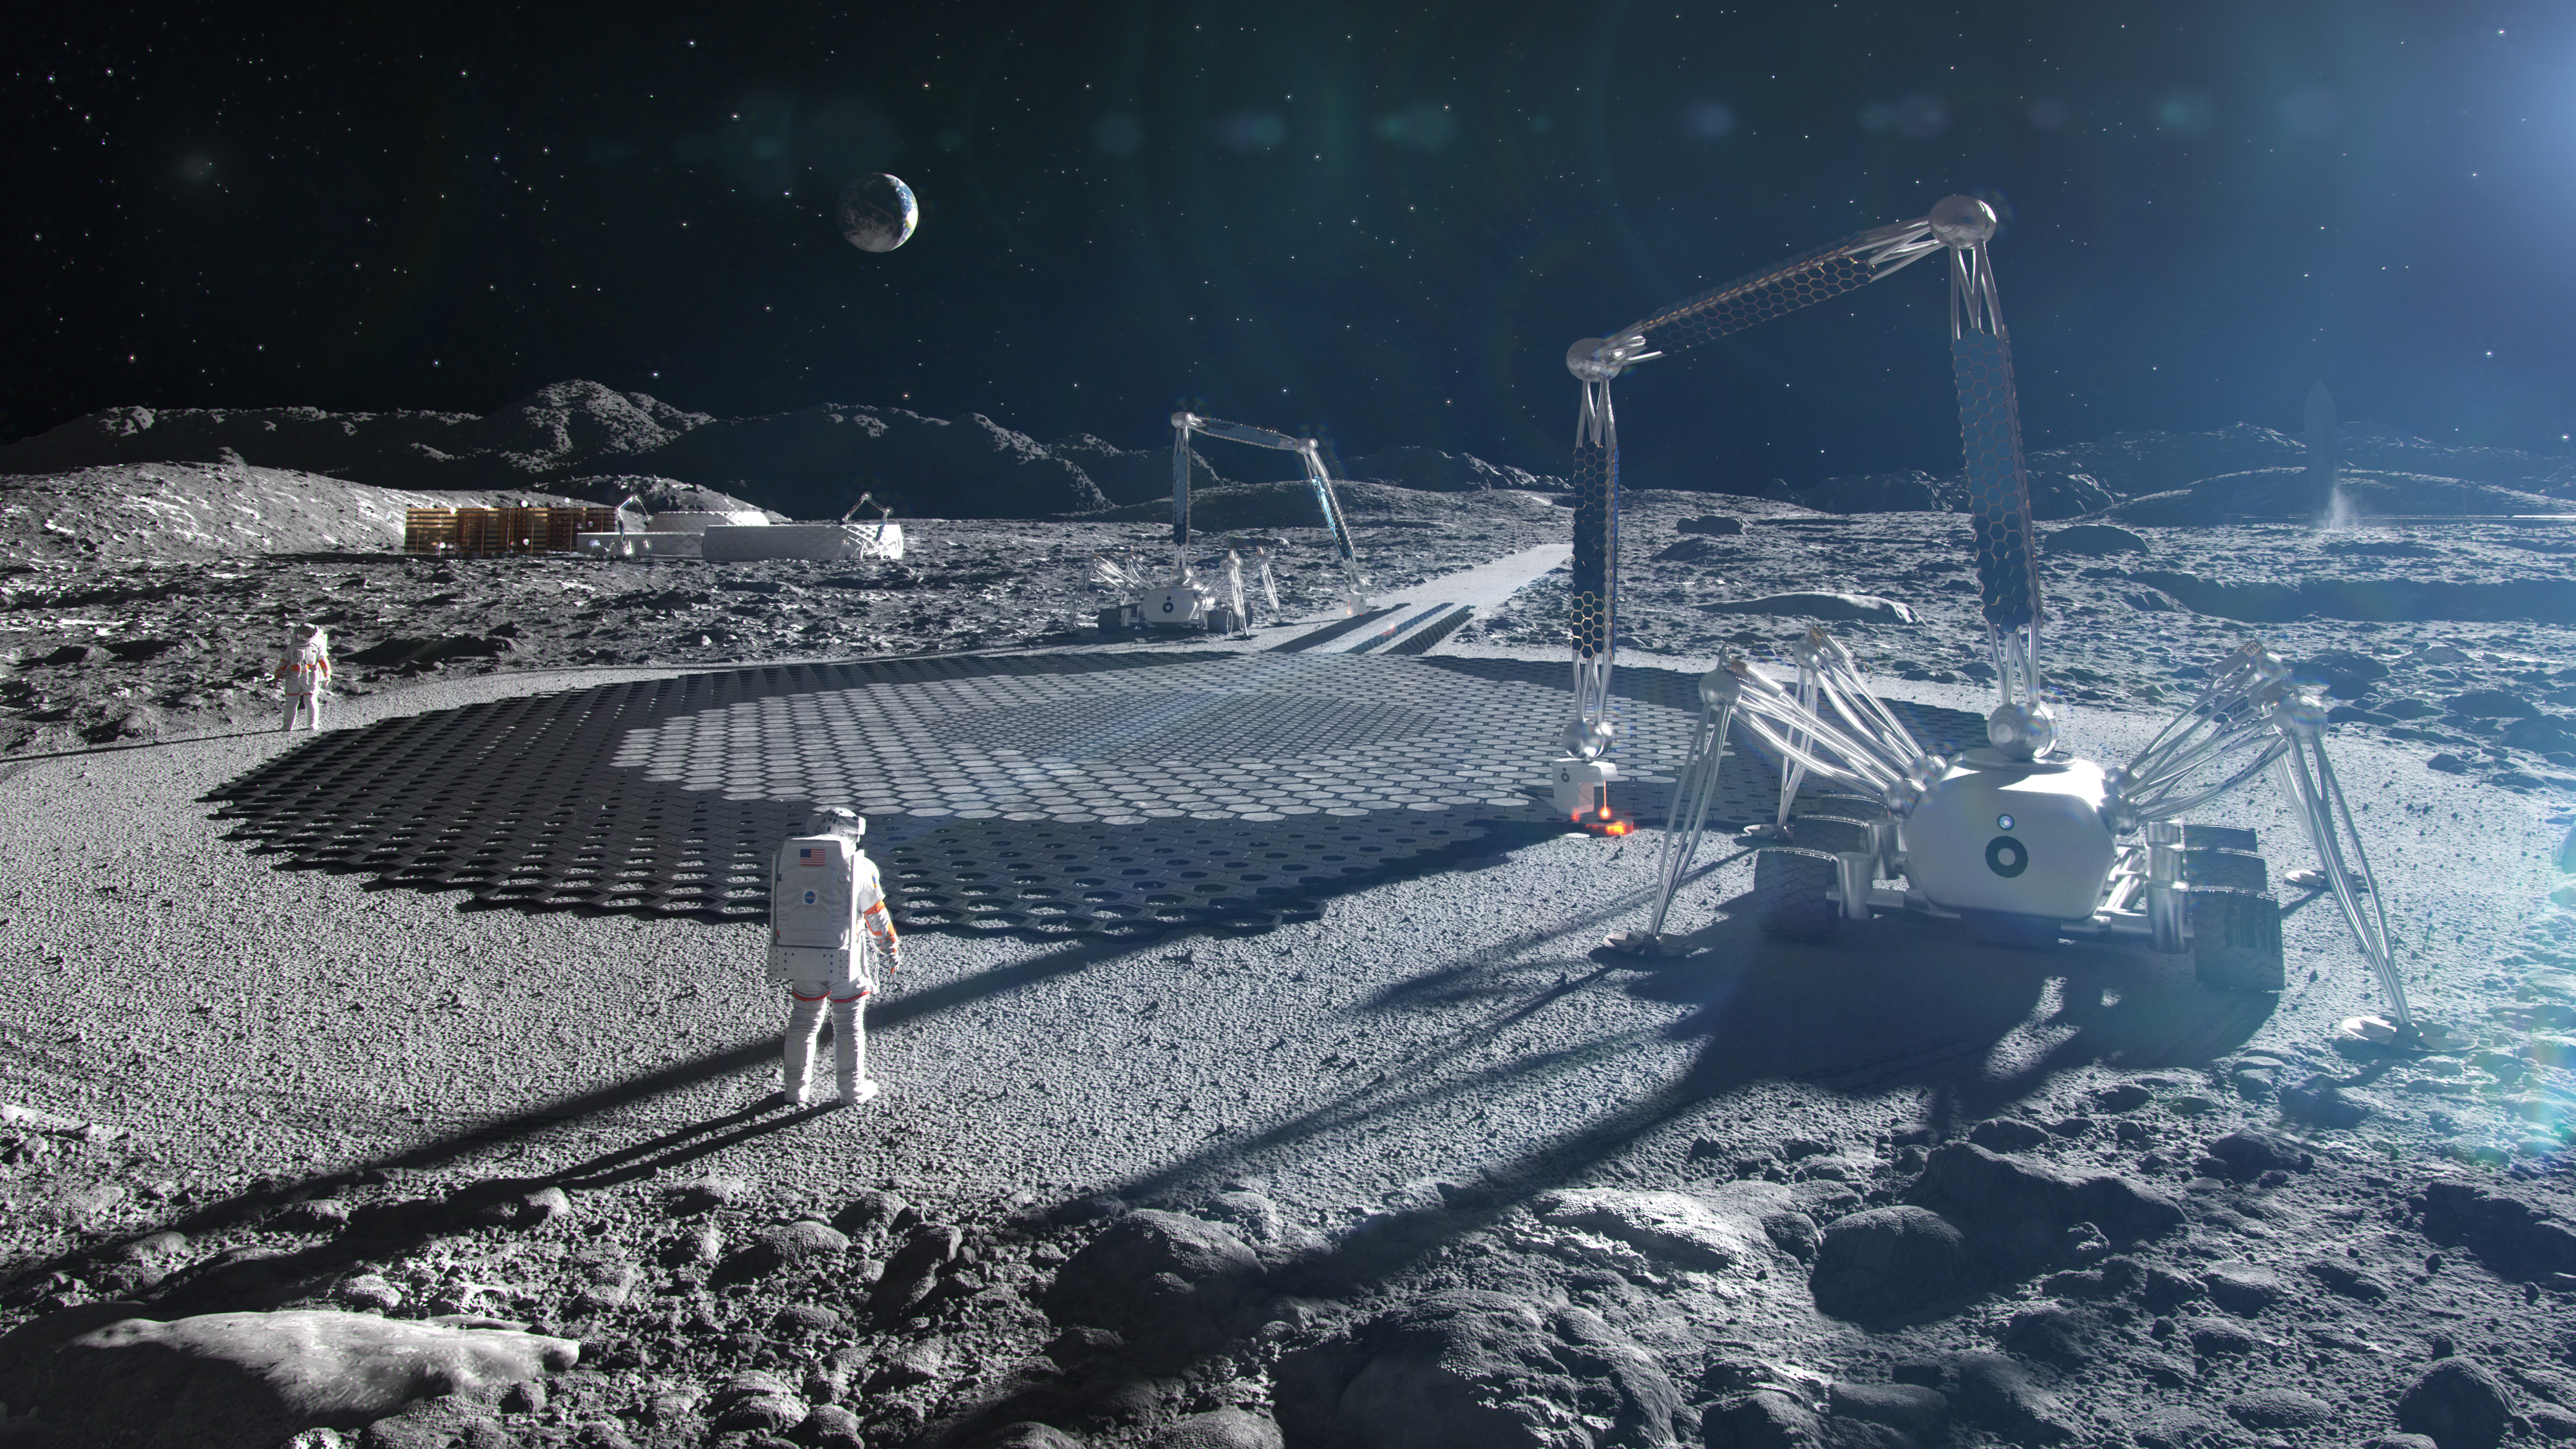 Building on the moon: NASA awards Texas company $57 million for lunar construction system